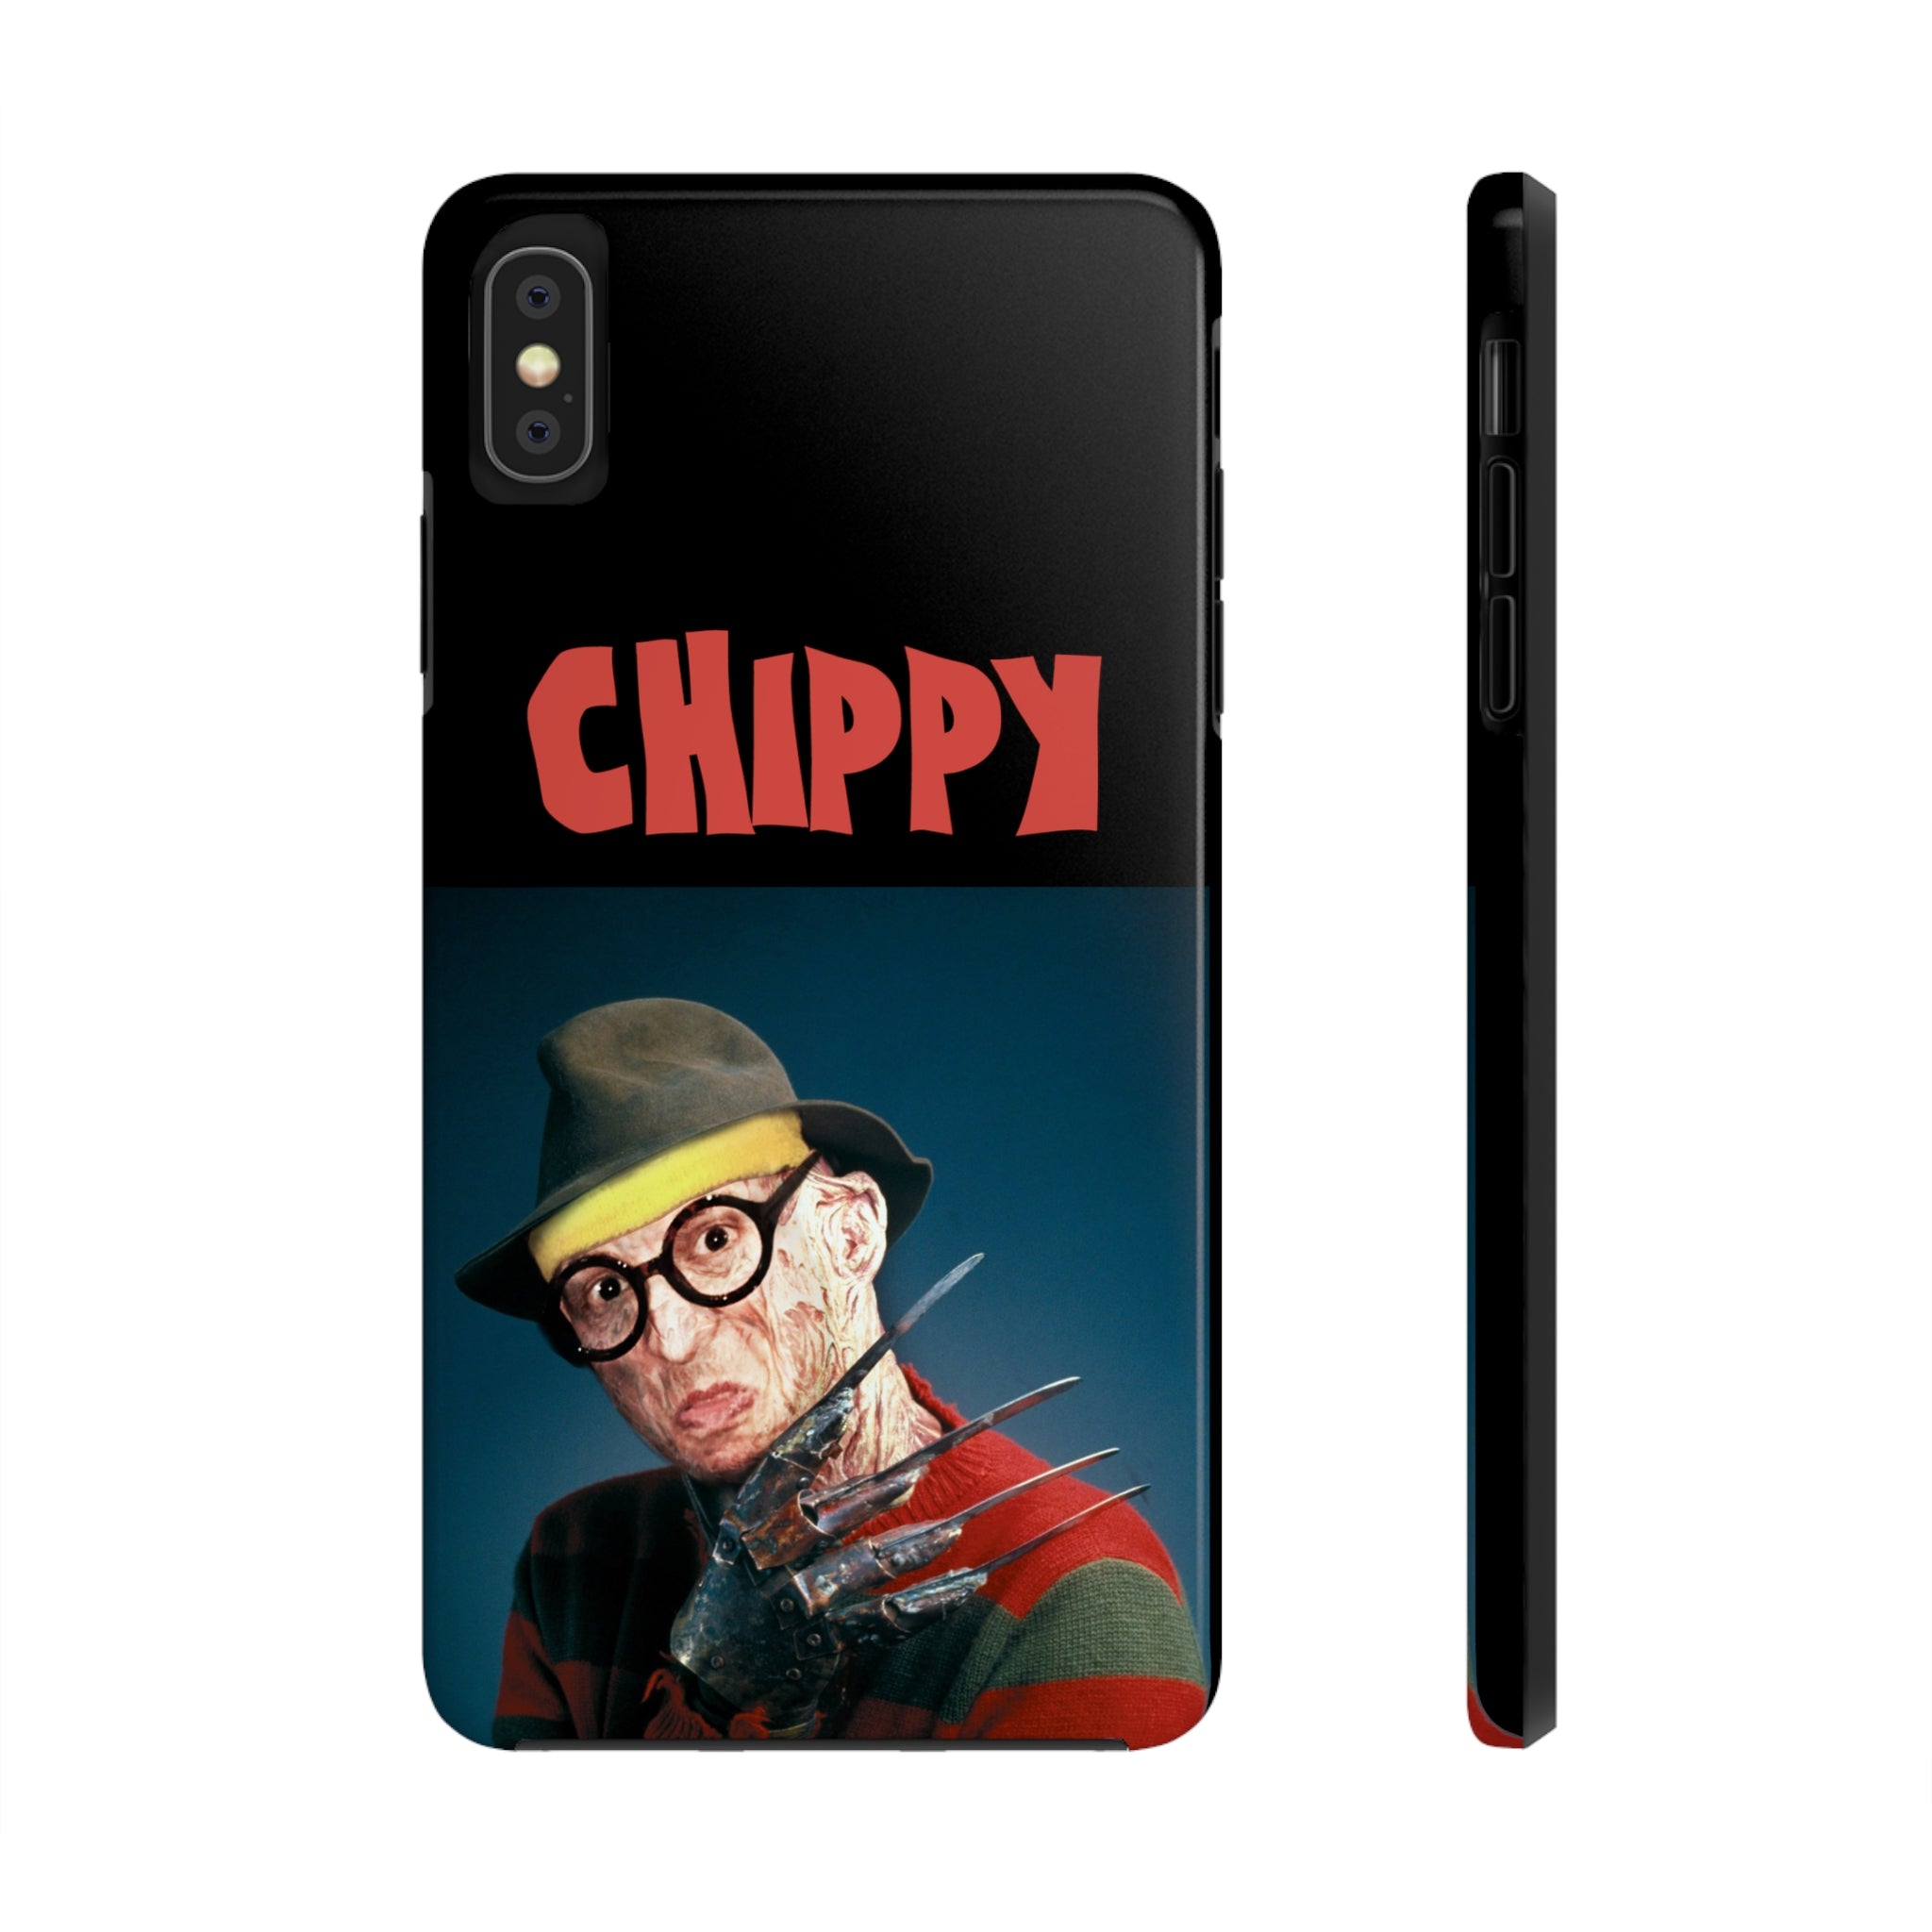 CHIPPY Tough Phone Cases